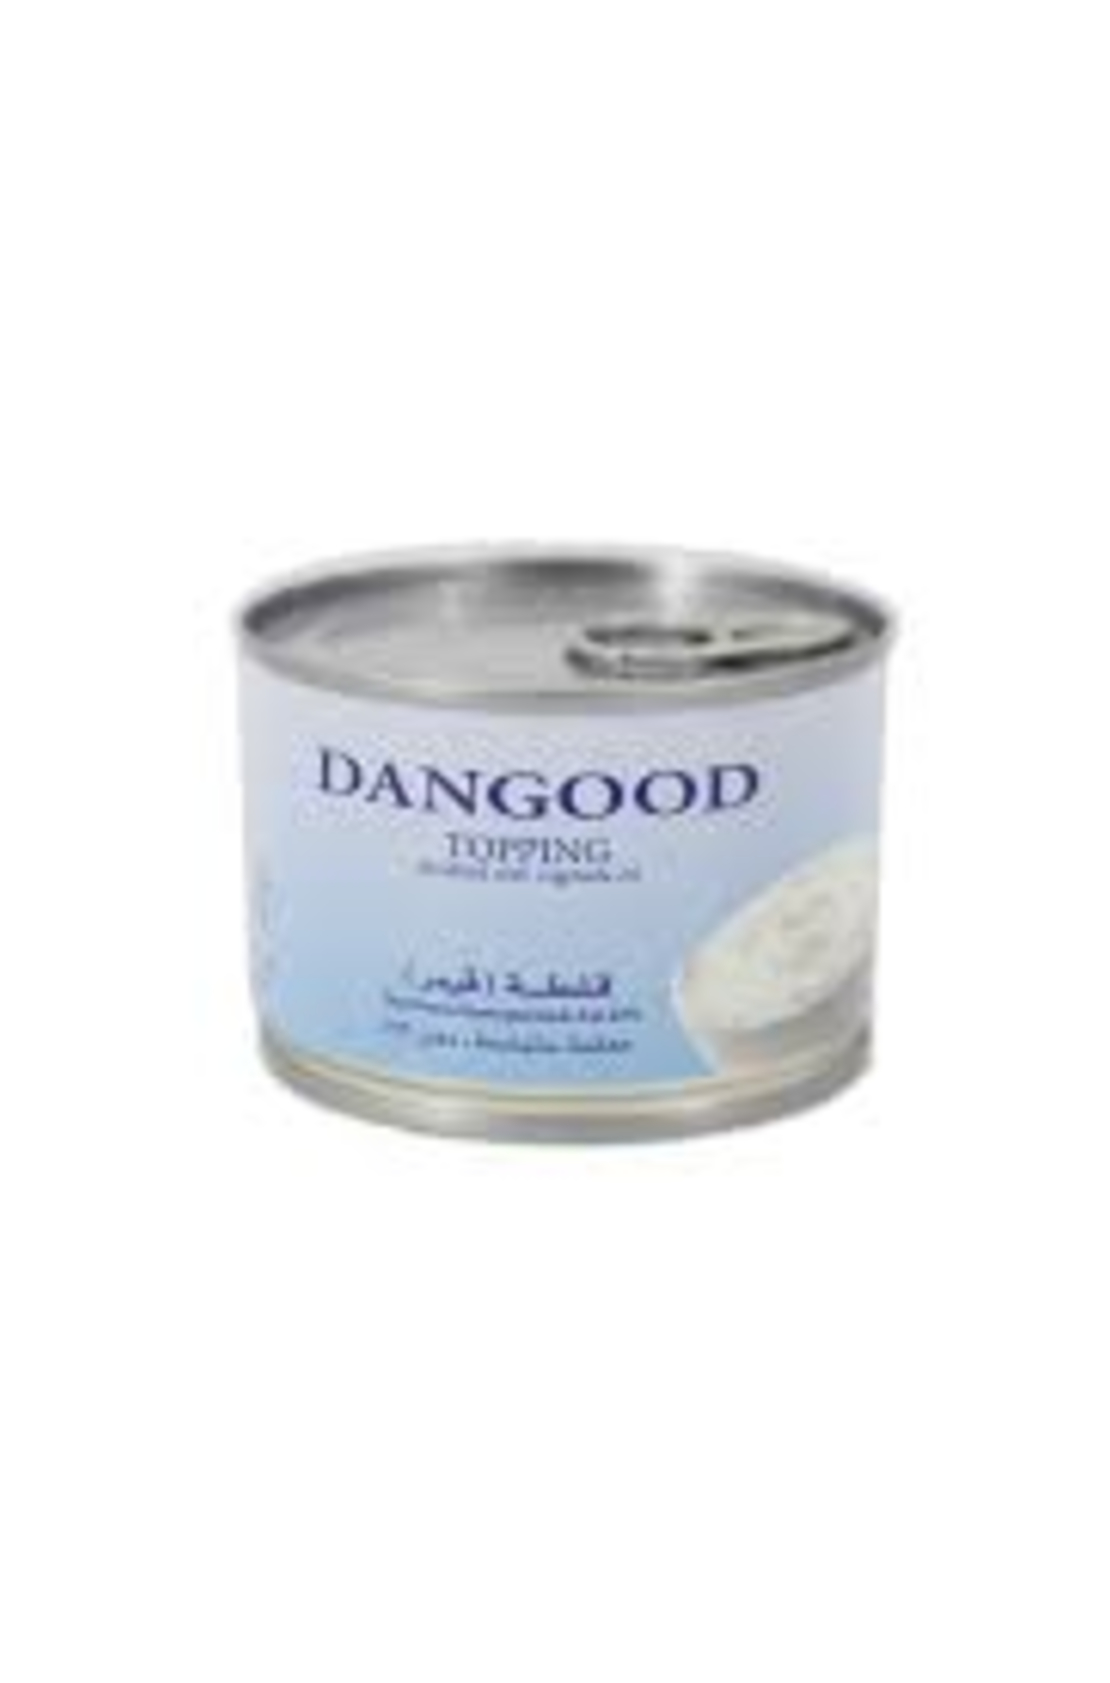 Dangood - Topping 170g